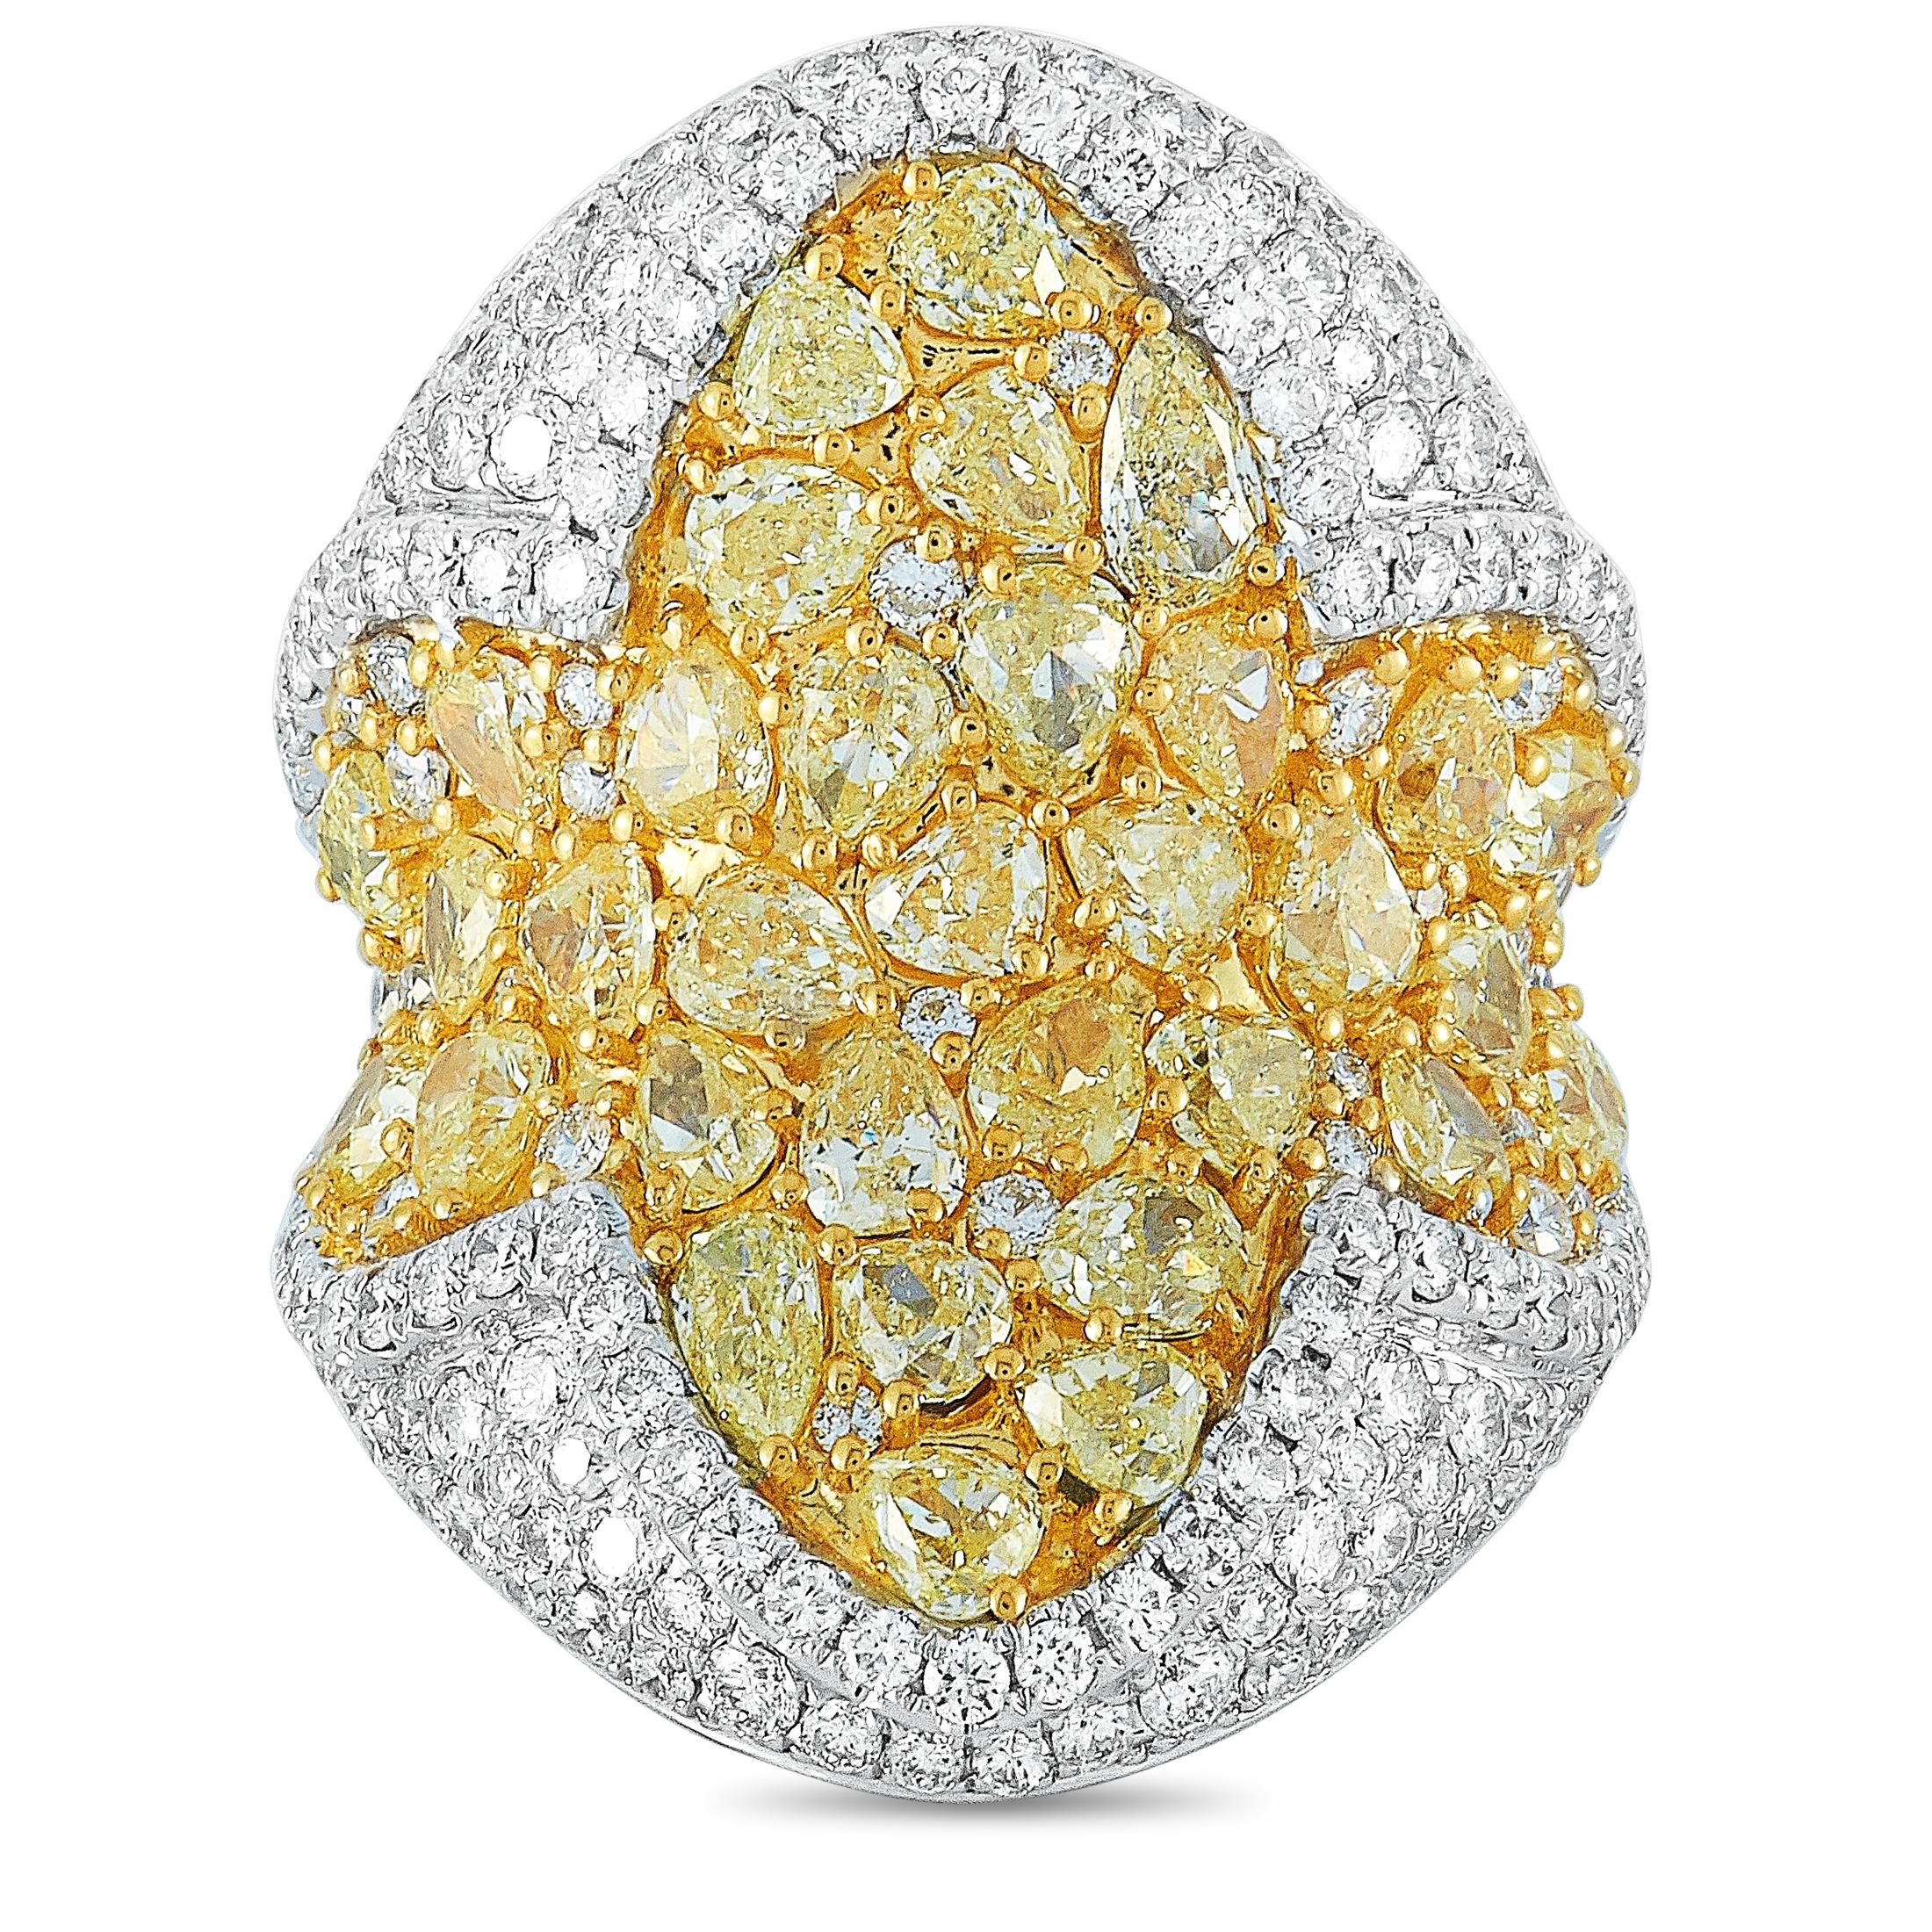 LB Exclusive 18 Karat White Gold 7.09 Carat White and Yellow Diamond Ring 1